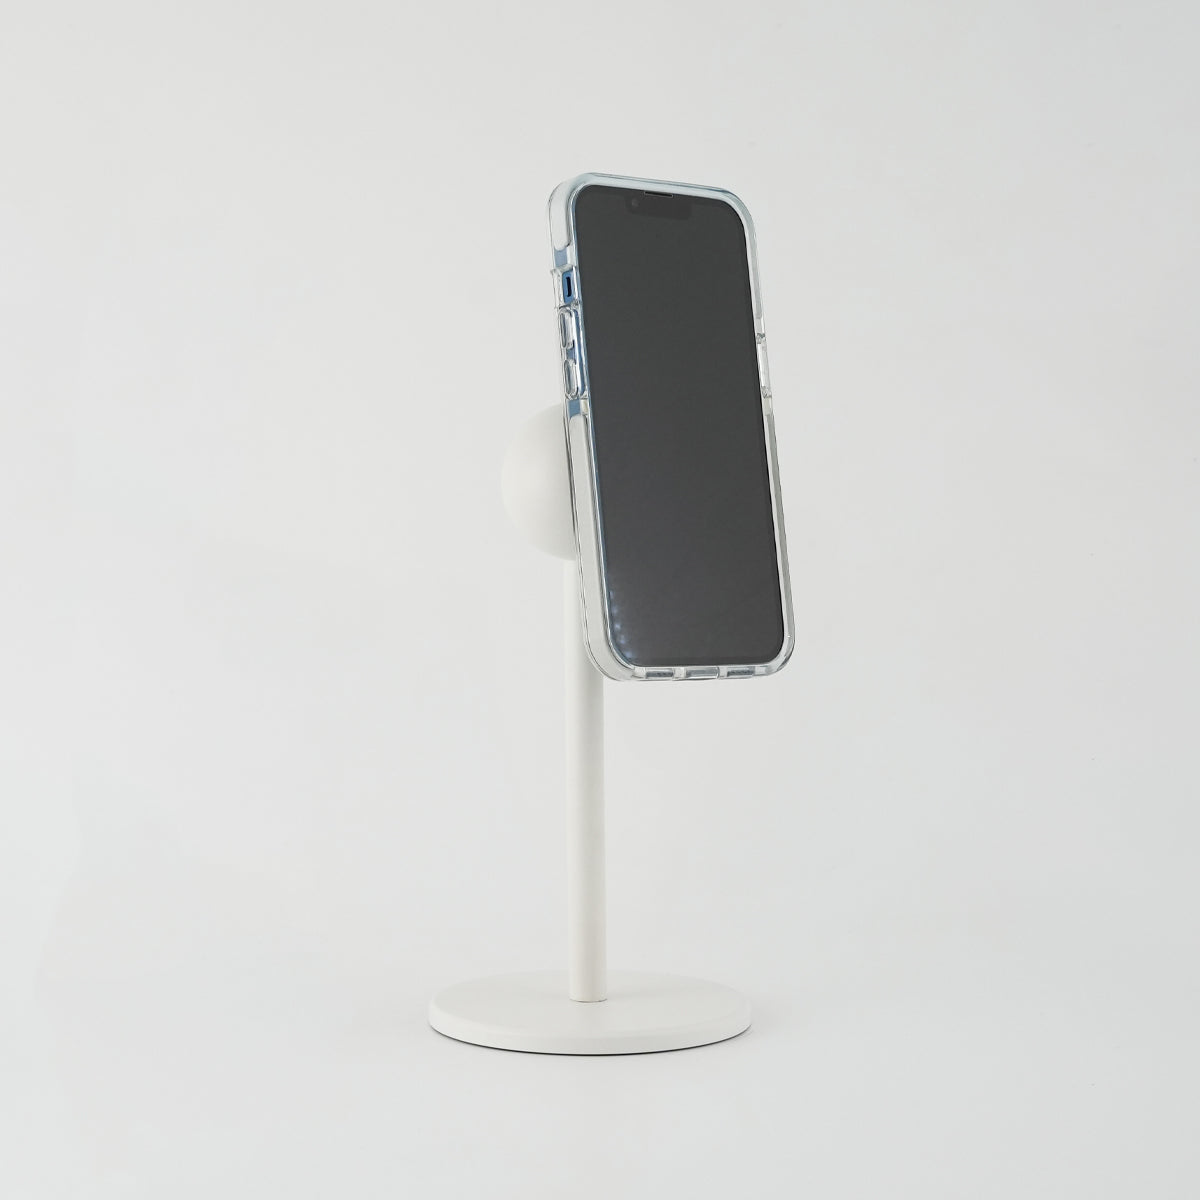 White Satin iOMini Magnetic Phone Mount (iOmini - White Satin with iPhone)